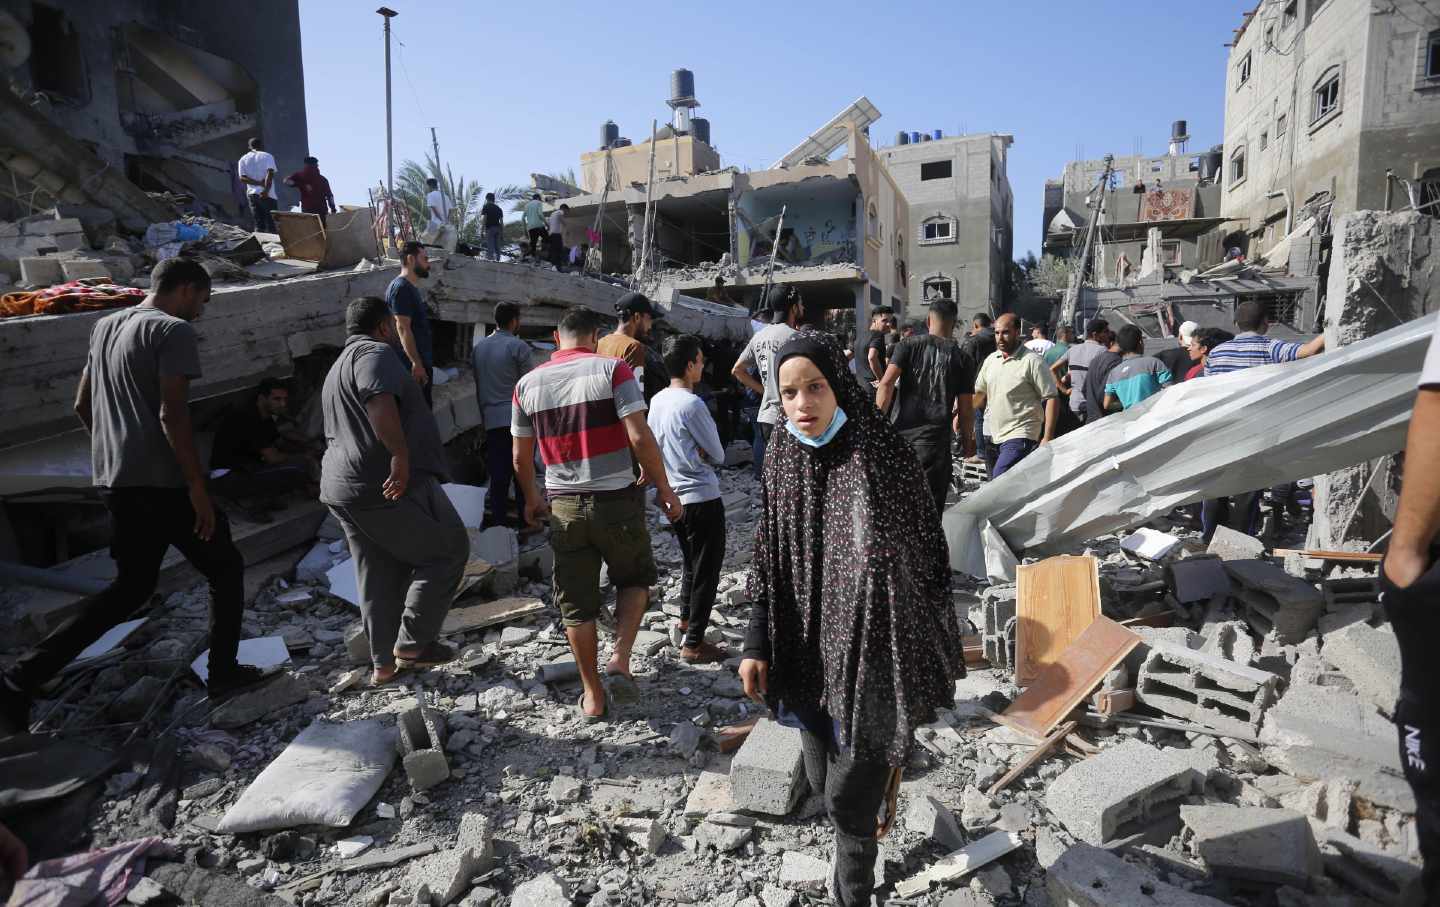 Civilians in Gaza rescue people trapped under rubble